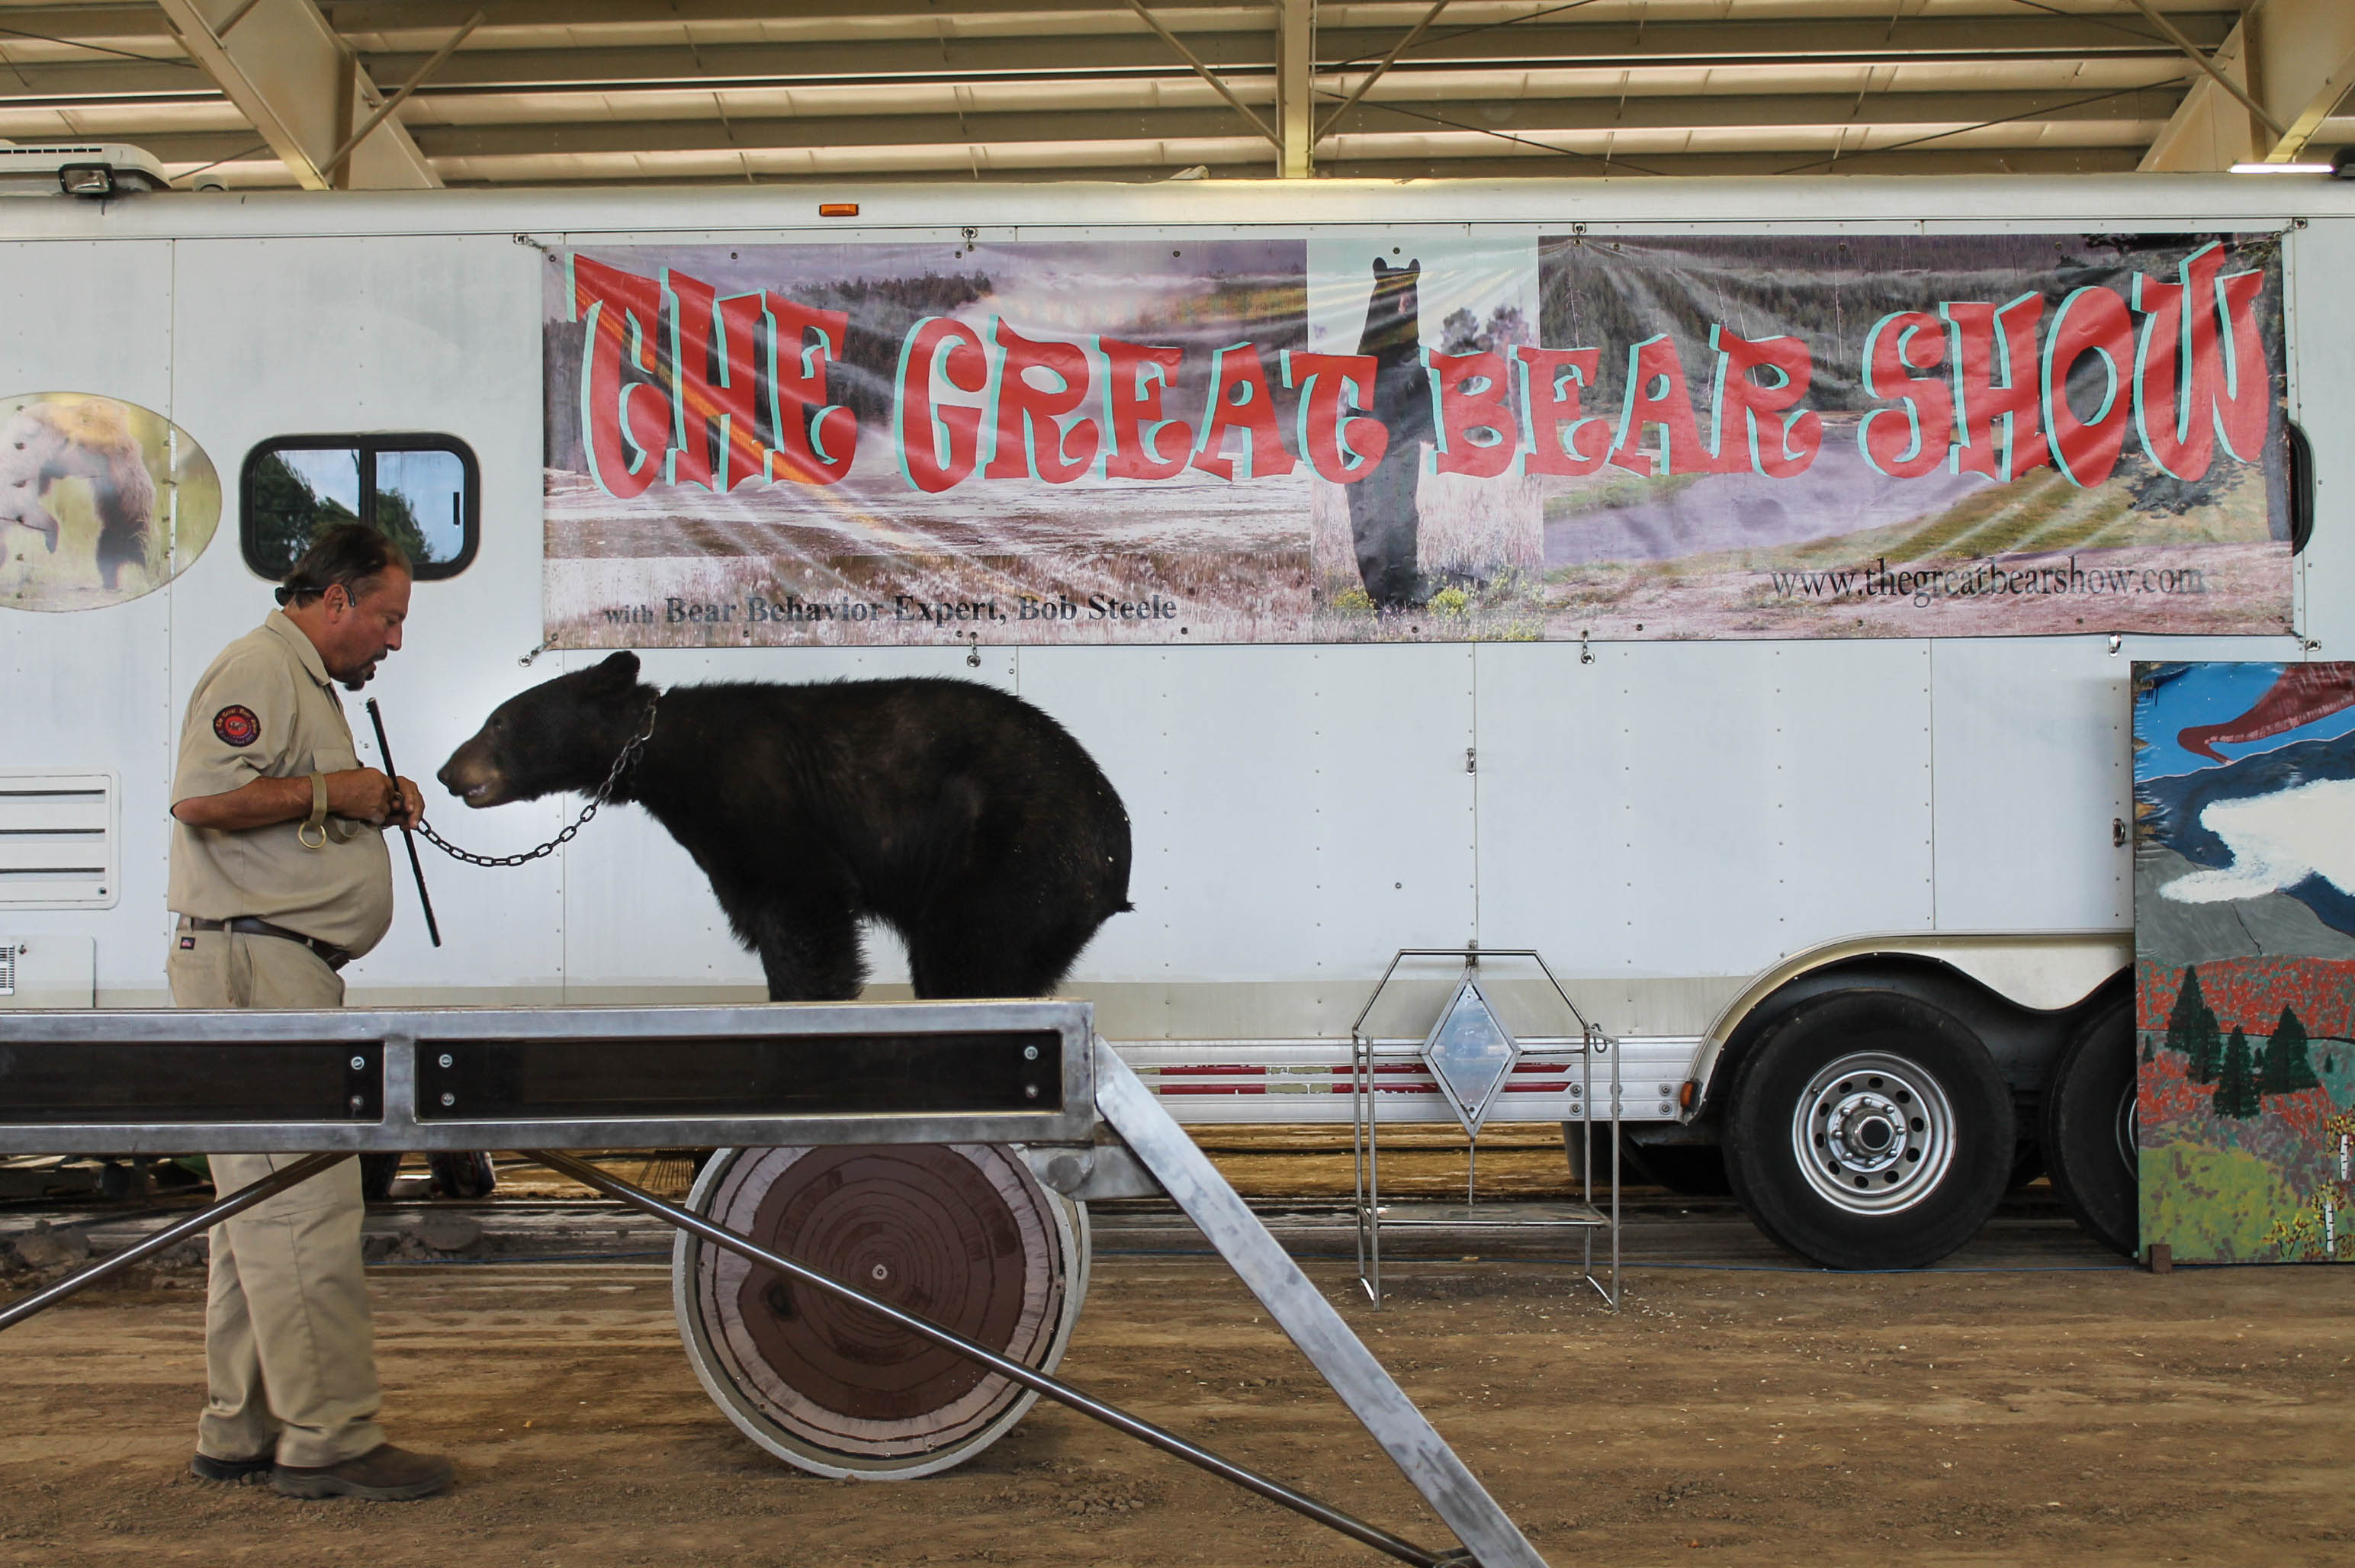 The Shameful Bear Circus at the Salt Lake County Fair